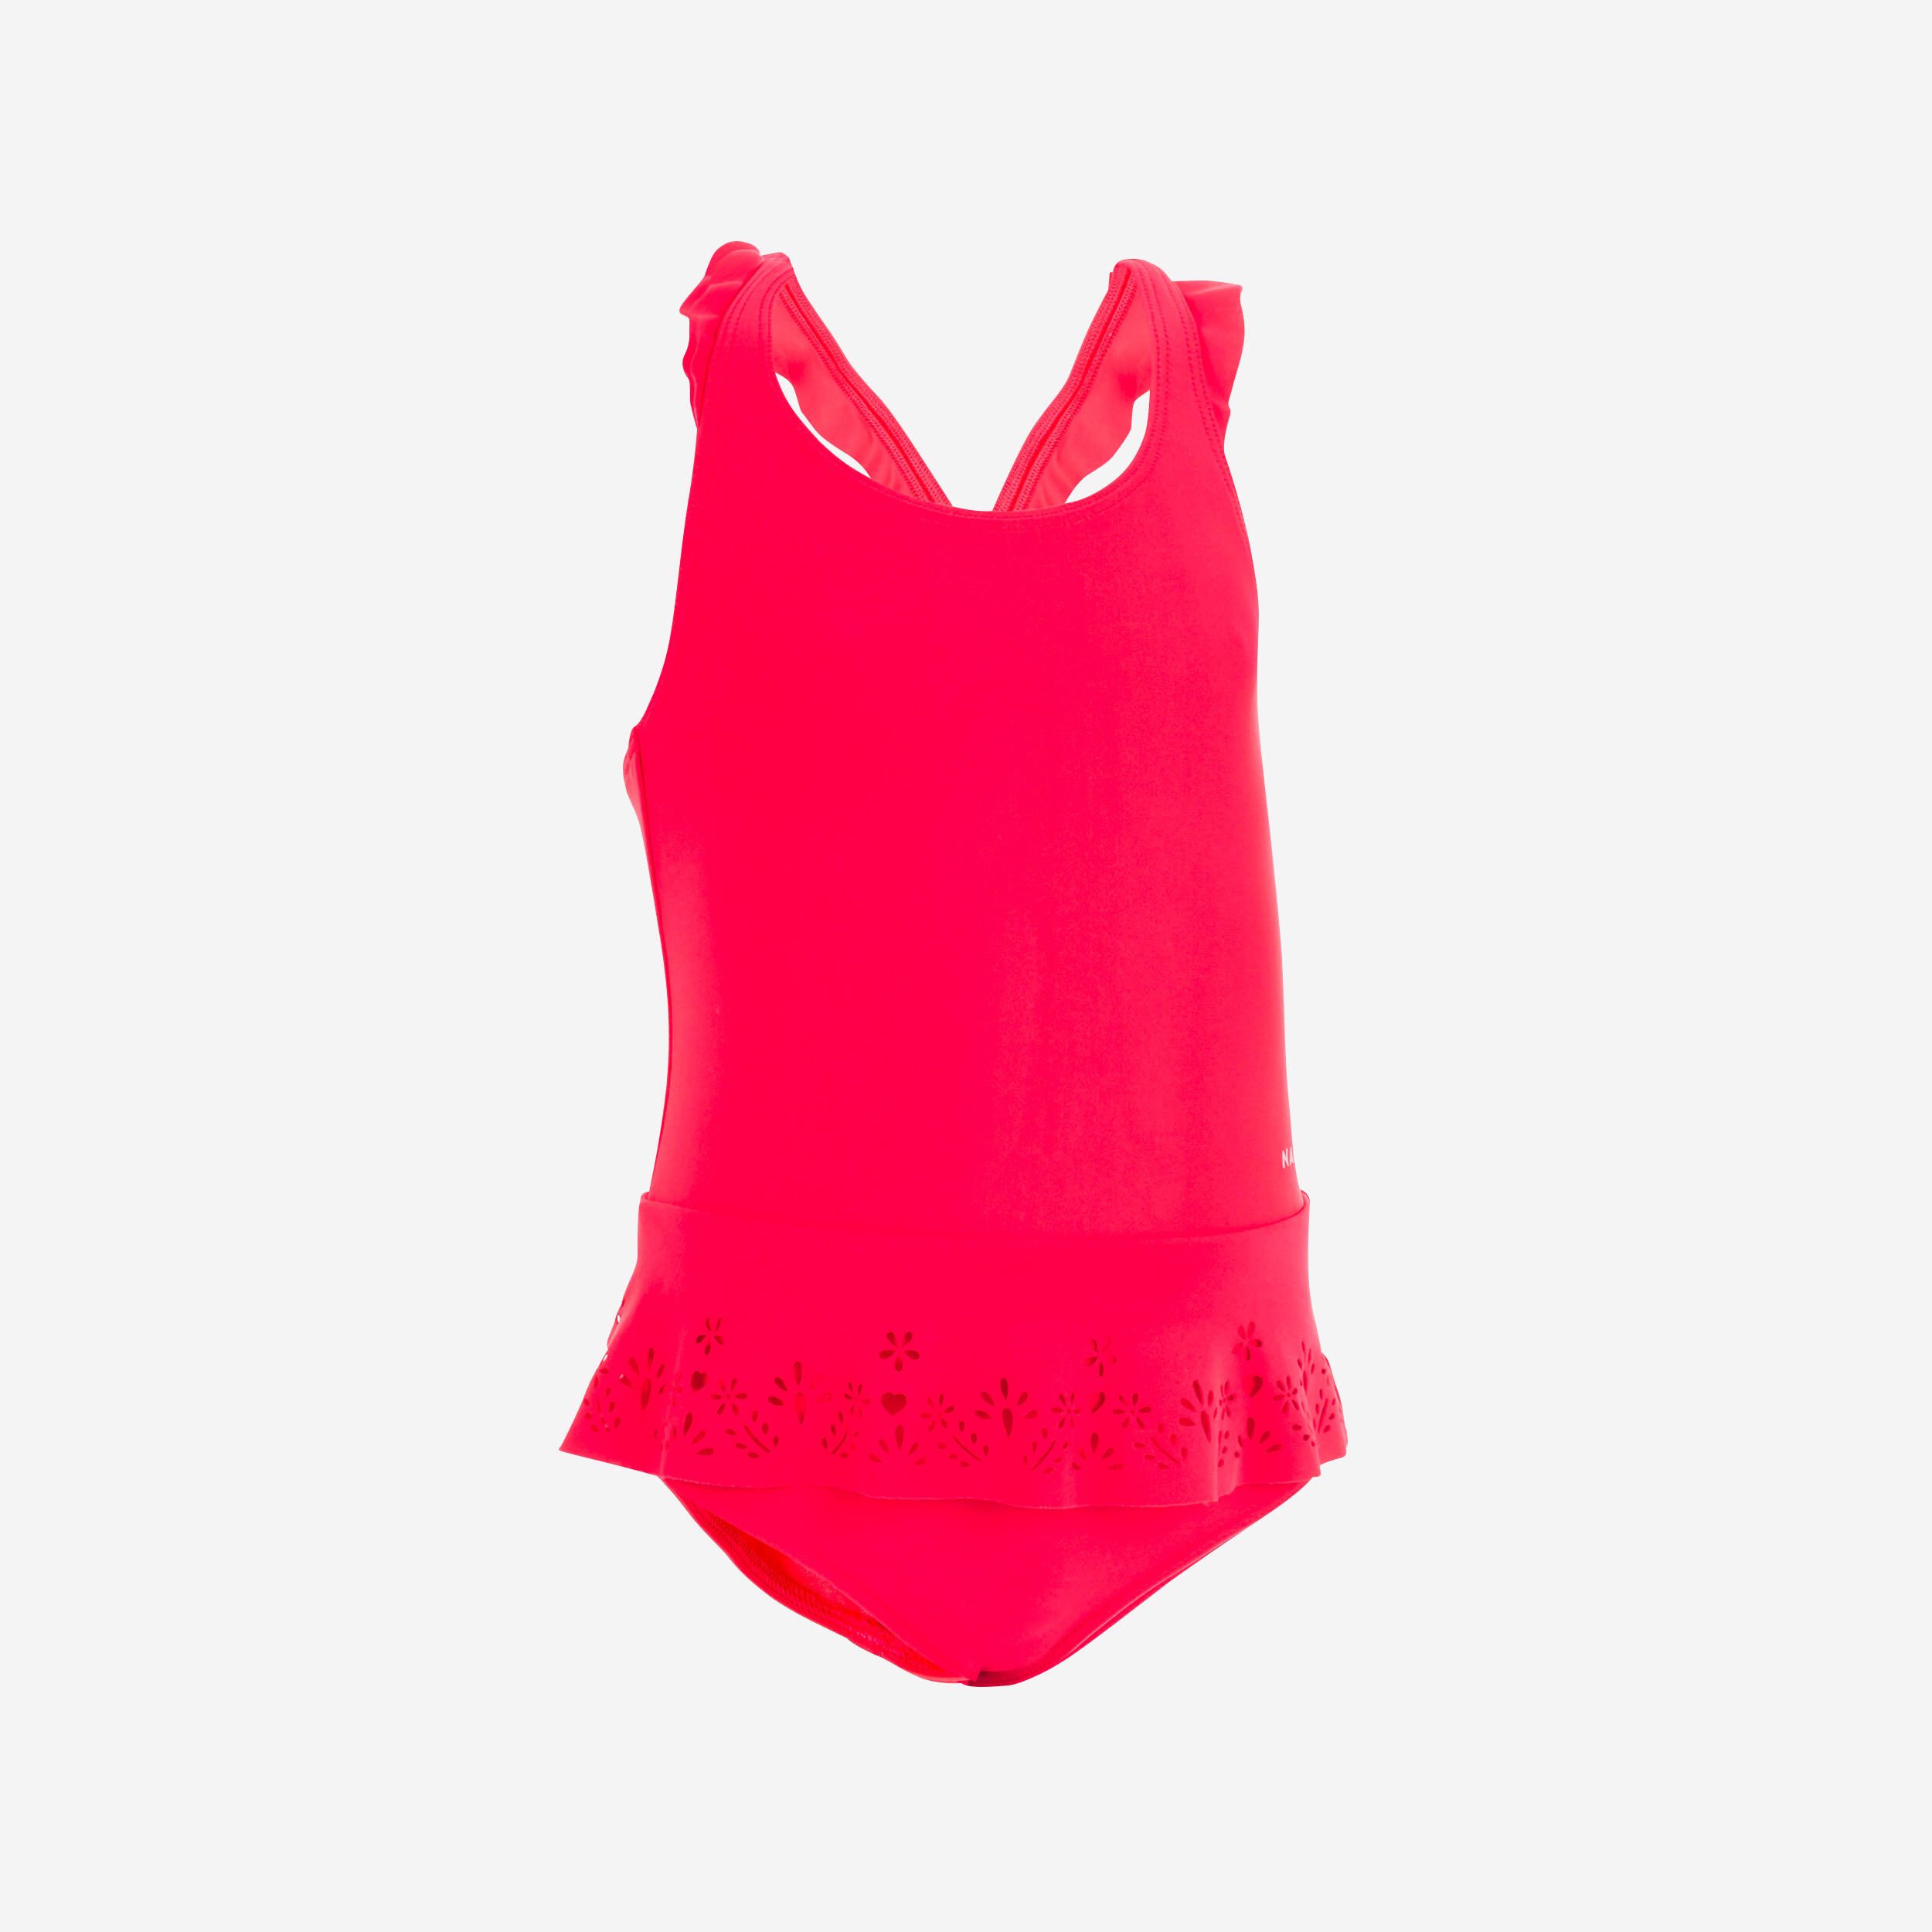 Girls' 1-Piece Miniskirt Swimsuit - Red - NABAIJI